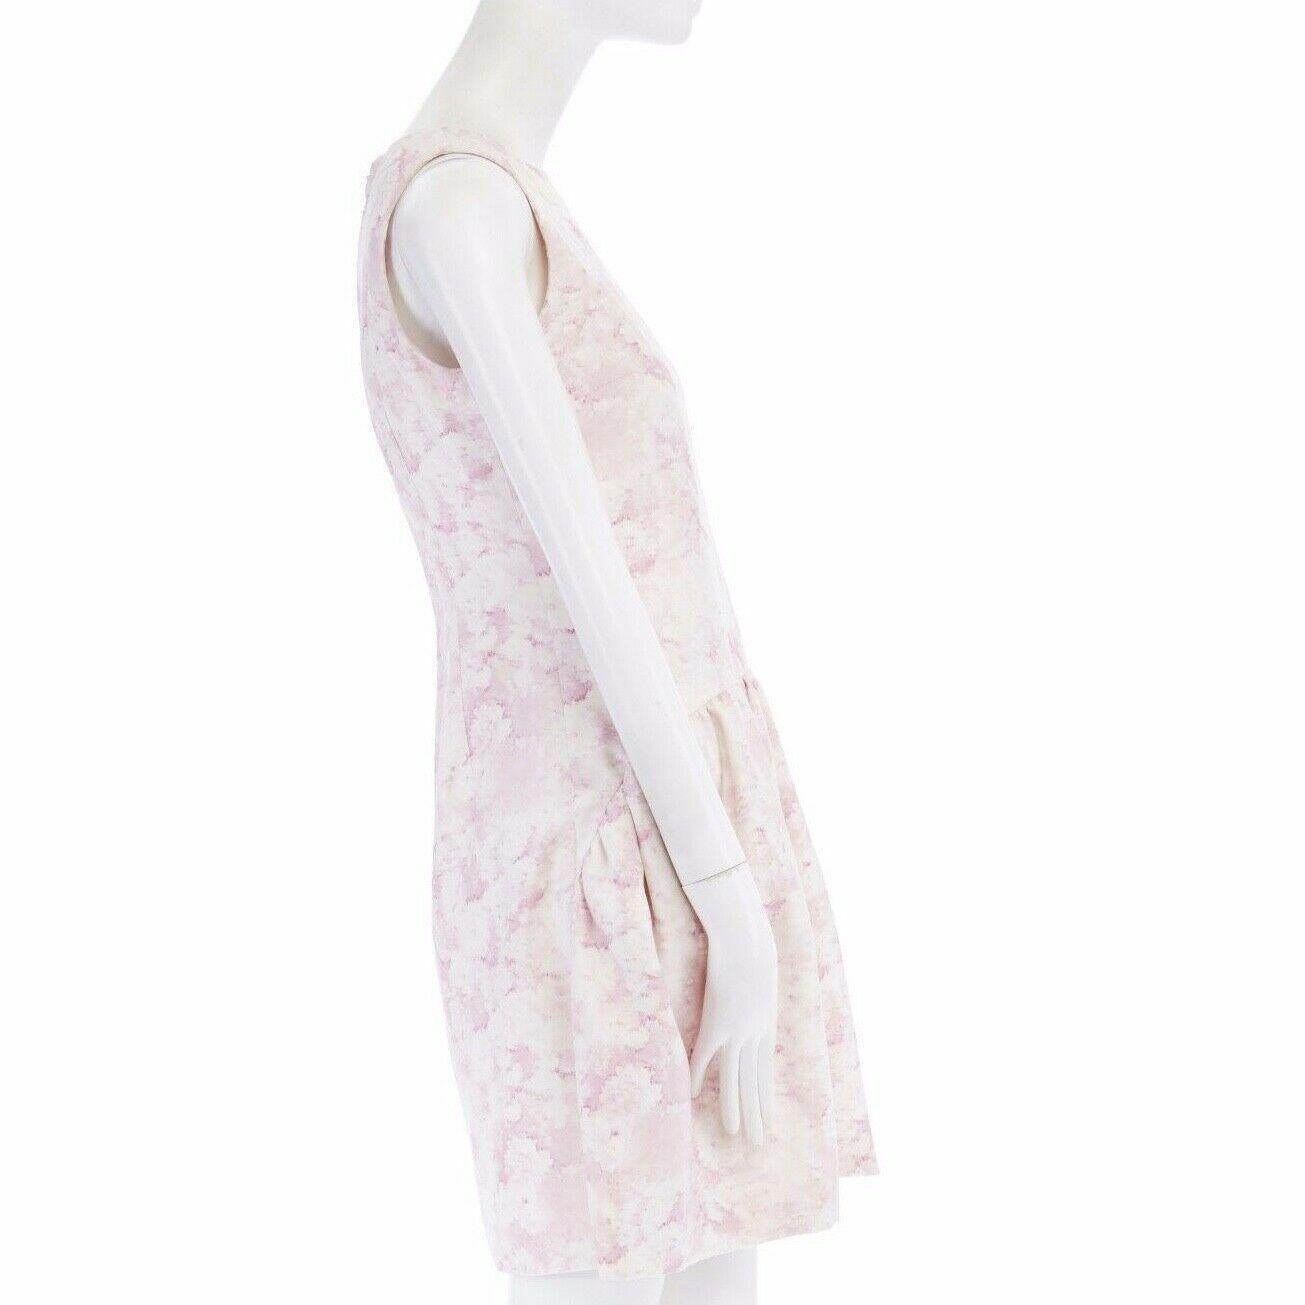 GIAMBATTISTA VALLI white blush pink floral print silk bubble front dress IT40 S 1